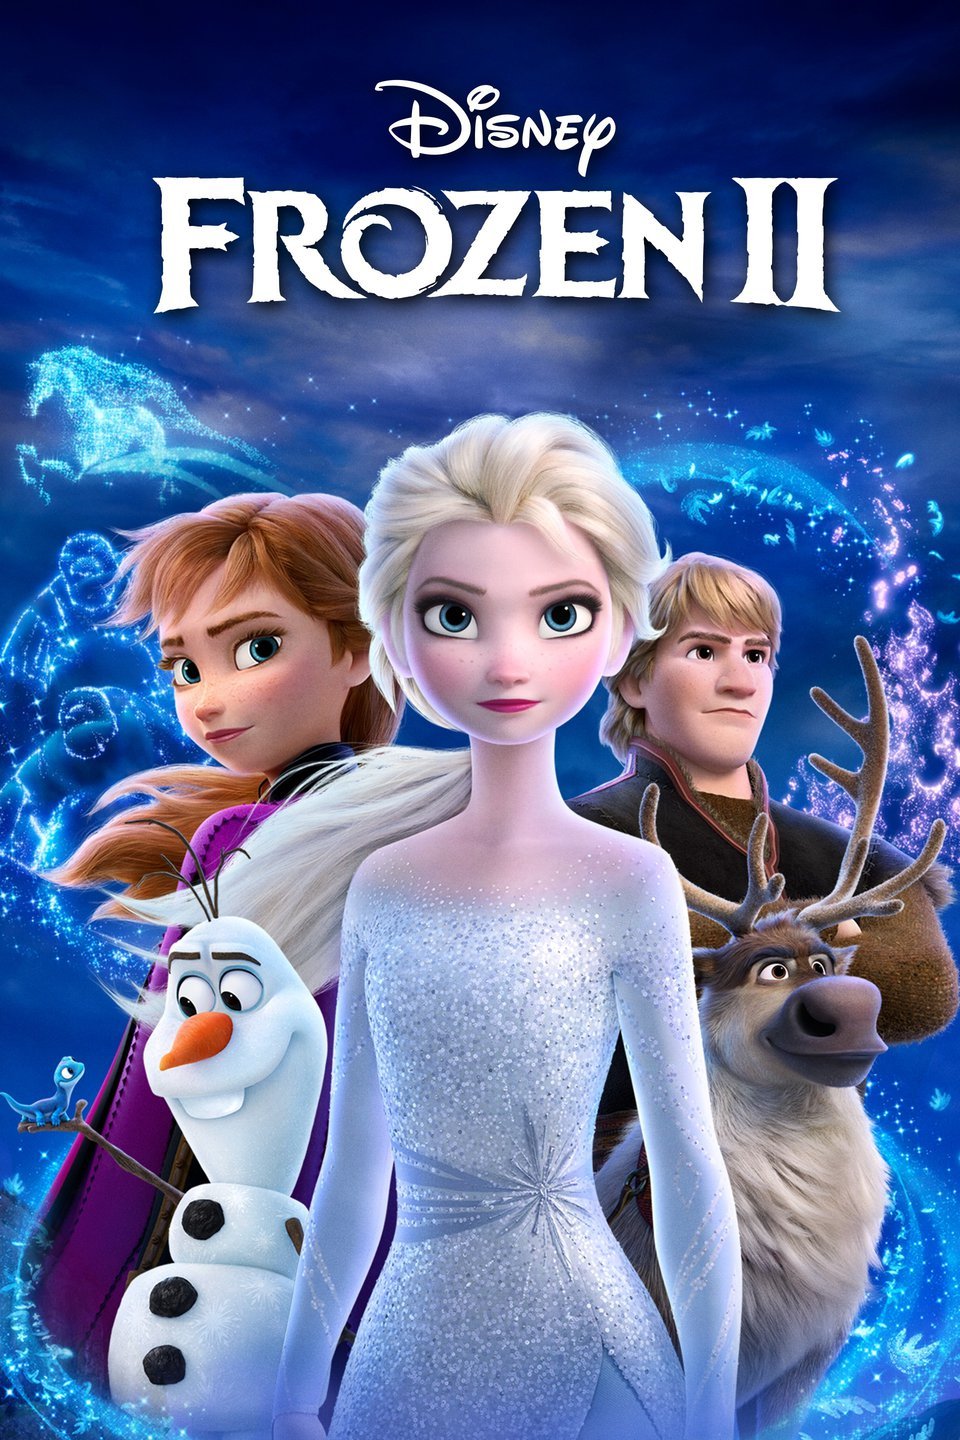 [MINI Super-HQ] Frozen II (2019) ผจญภัยปริศนาราชินีหิมะ ภาค 2 [1080p] [พากย์ไทย 5.1 + เสียงอังกฤษ DTS] [บรรยายไทย + อังกฤษ] [เสียงไทย + ซับไทย] [PANDAFILE]